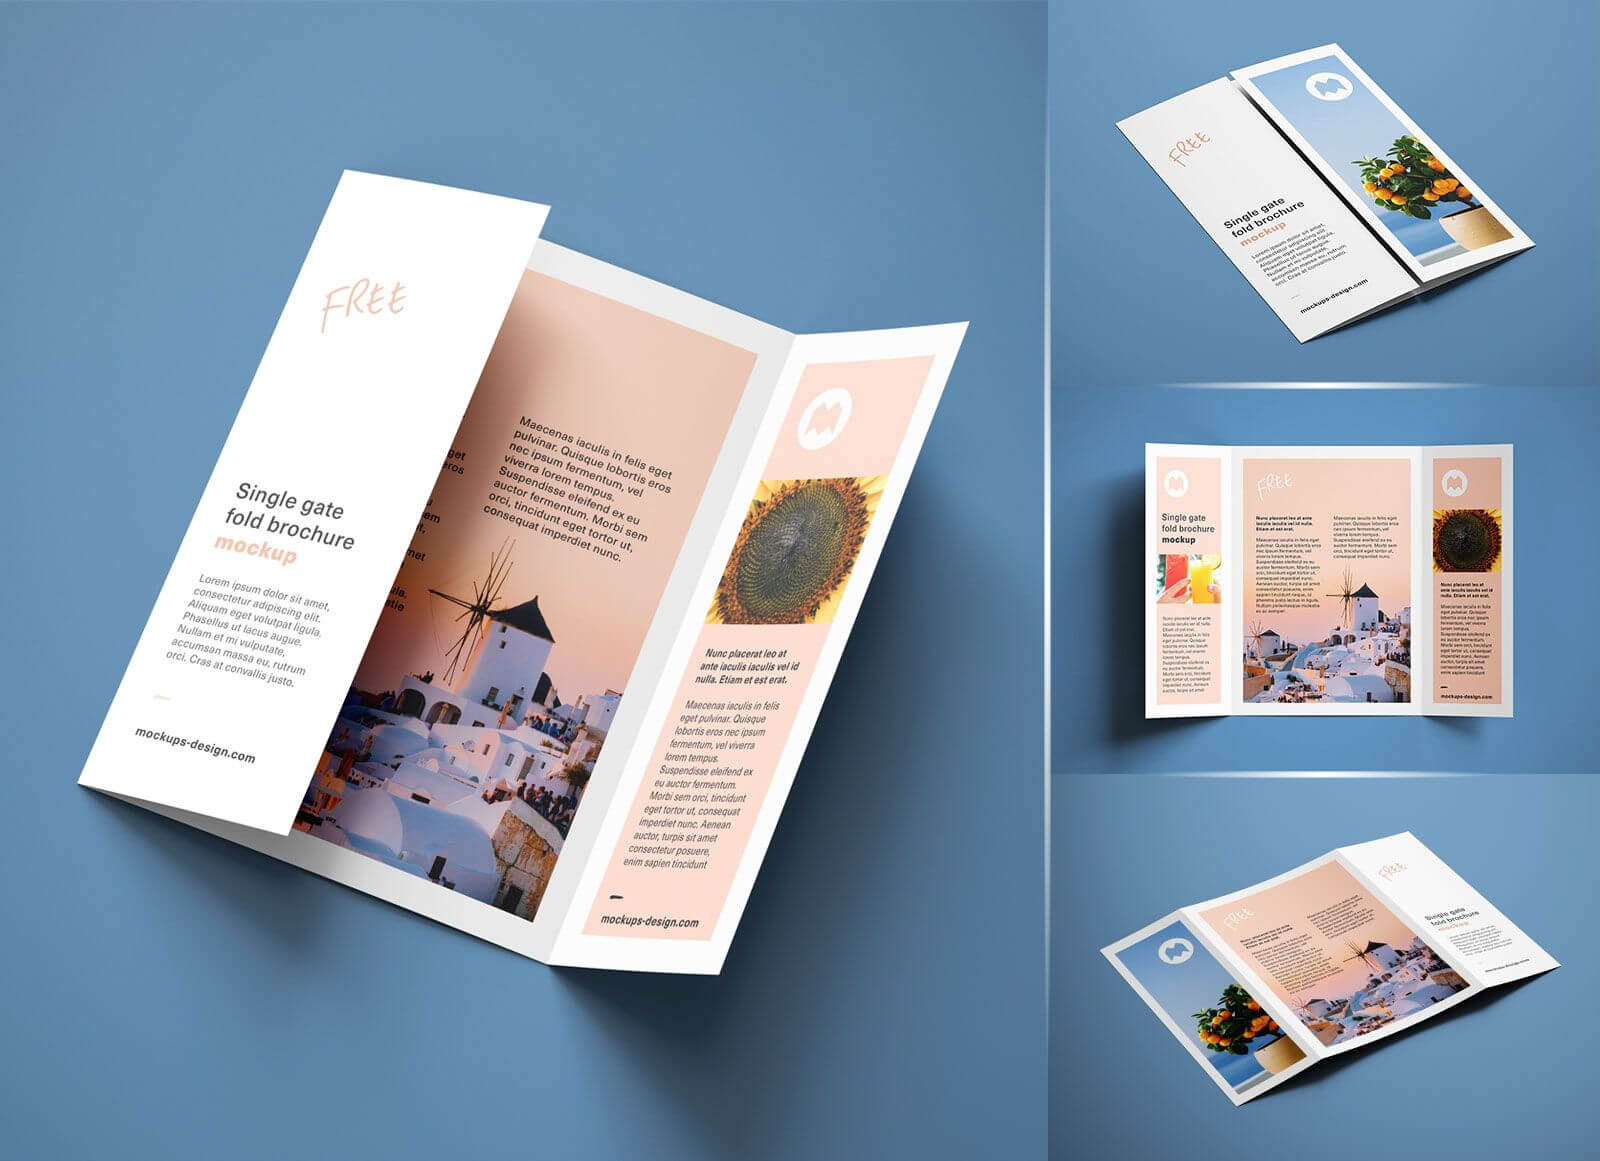 Free A4 Single Gate Fold Brochure Mockup Psd Set | Graphic For Gate Fold Brochure Template Indesign